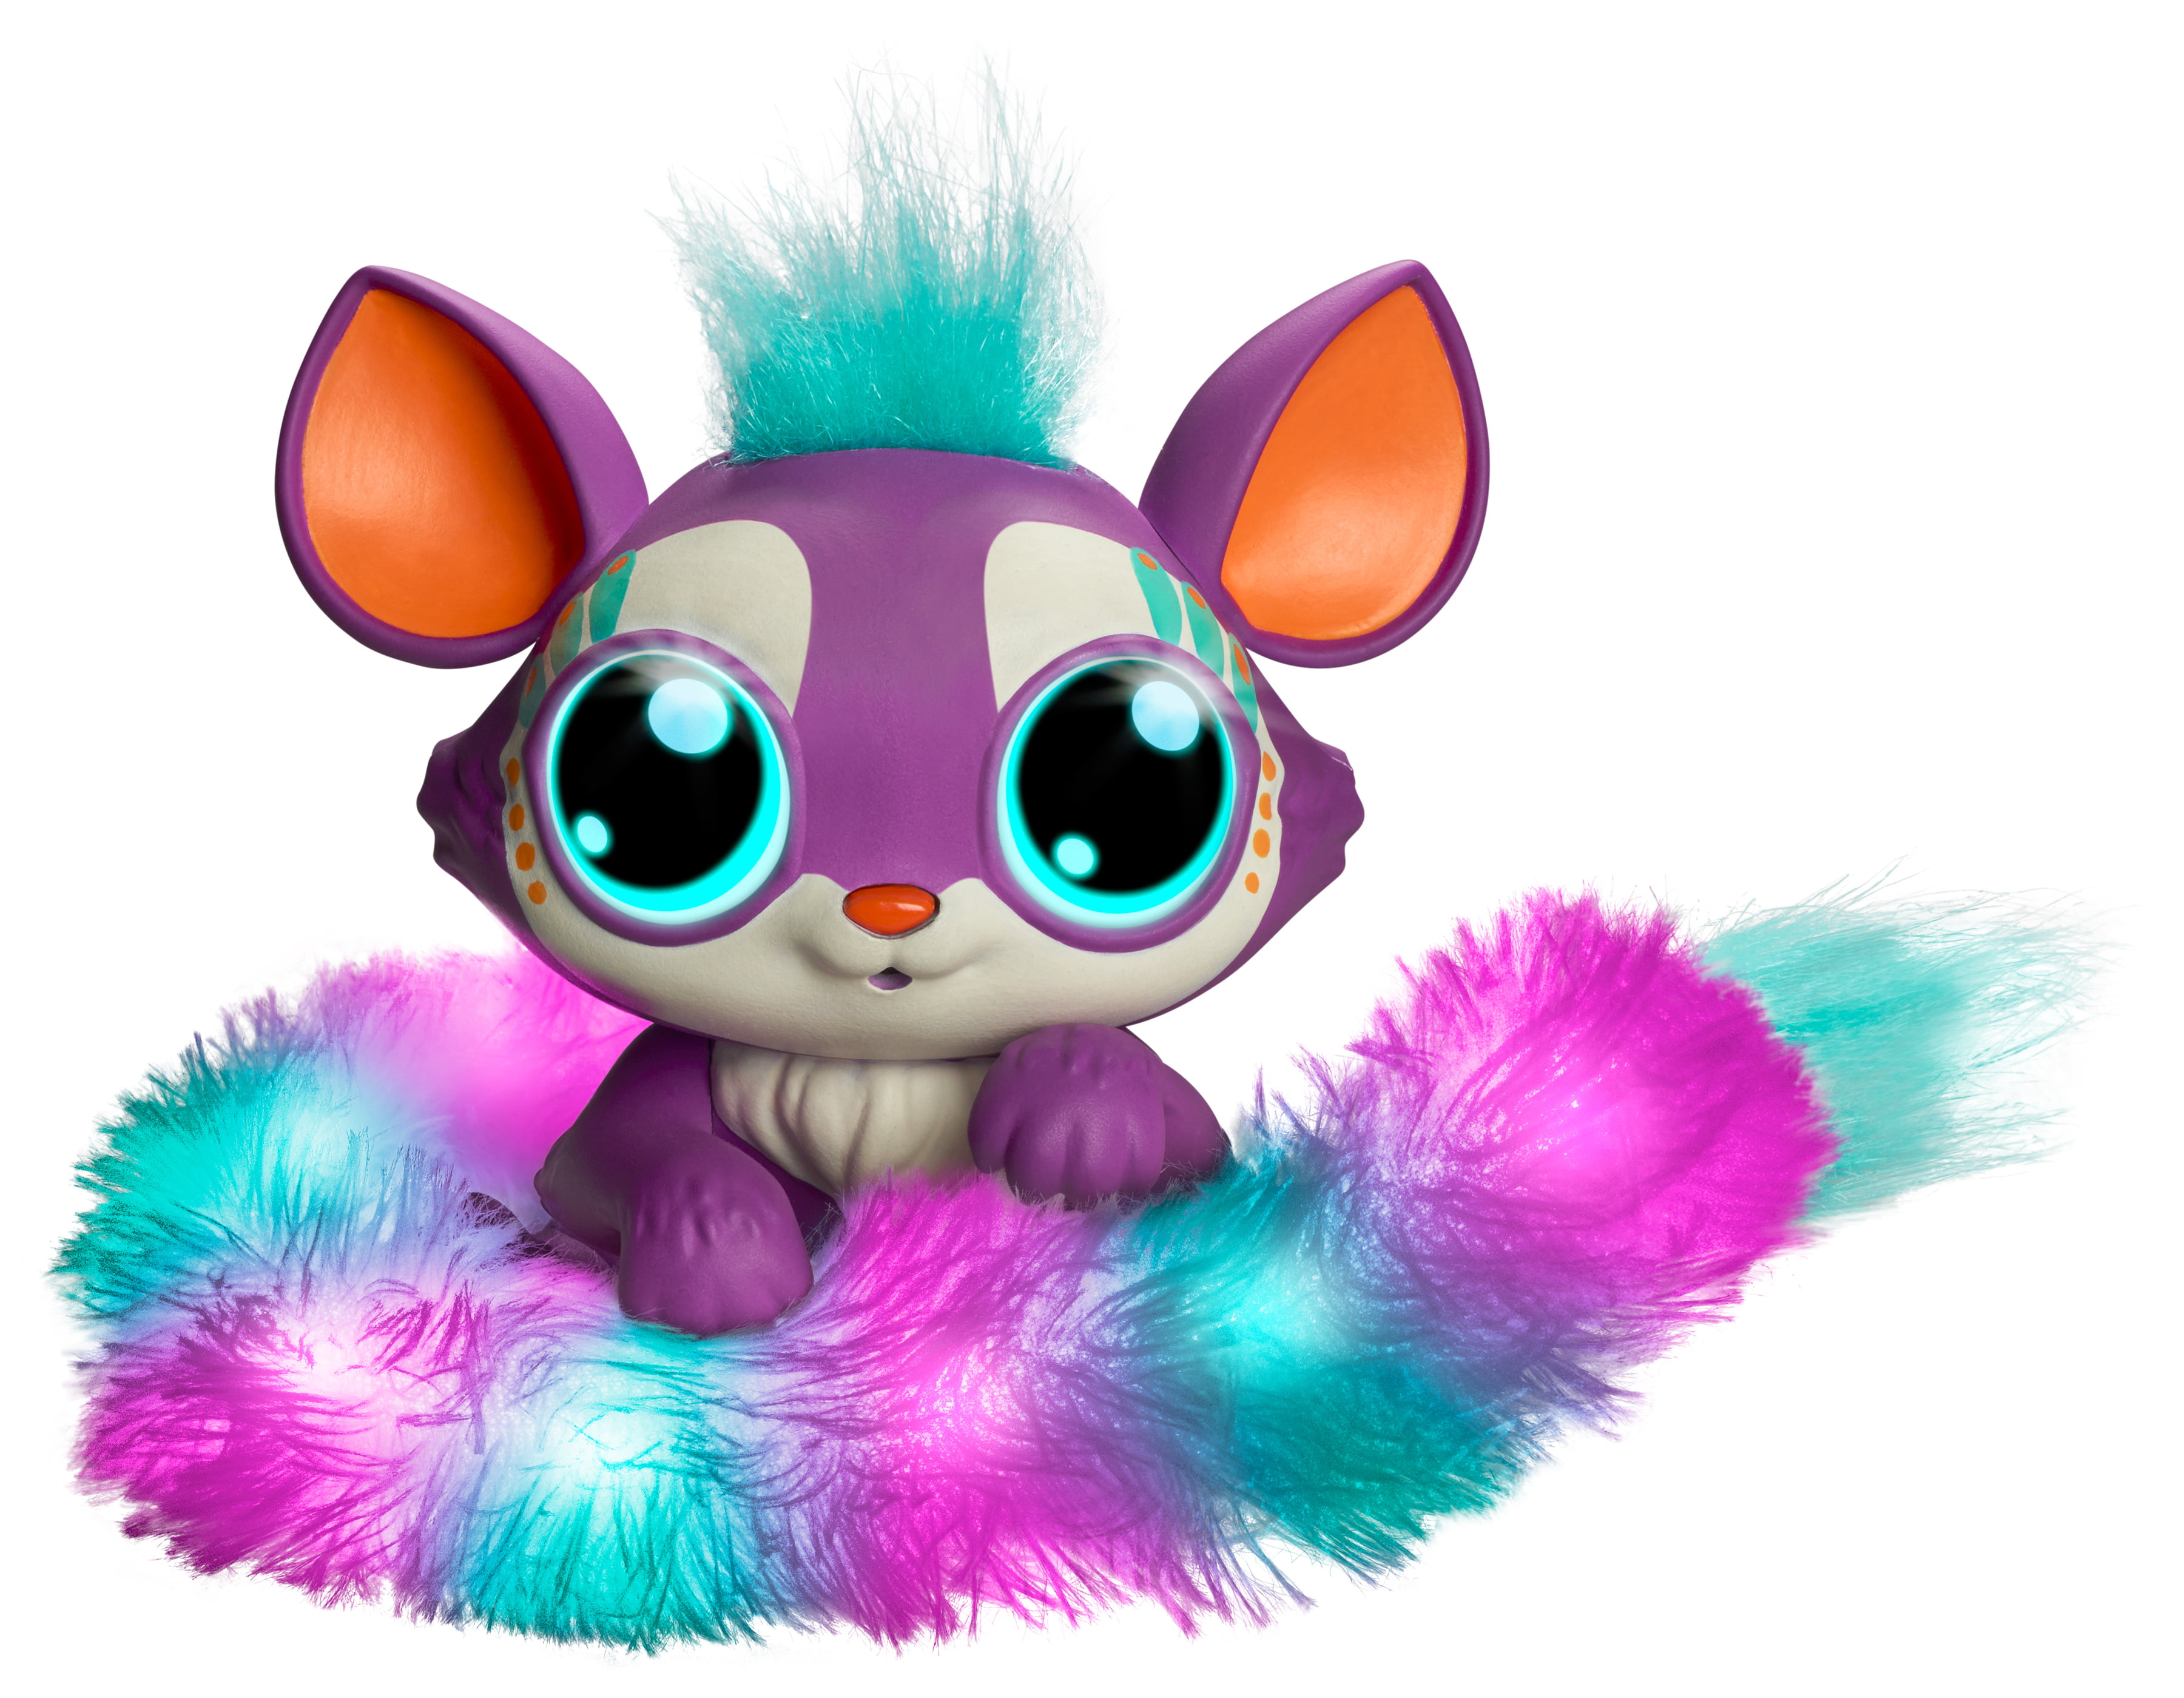 Lights Up Interactive Talking Toy Girls 5+ Lil' Gleemerz Glowzer Furry Friend 